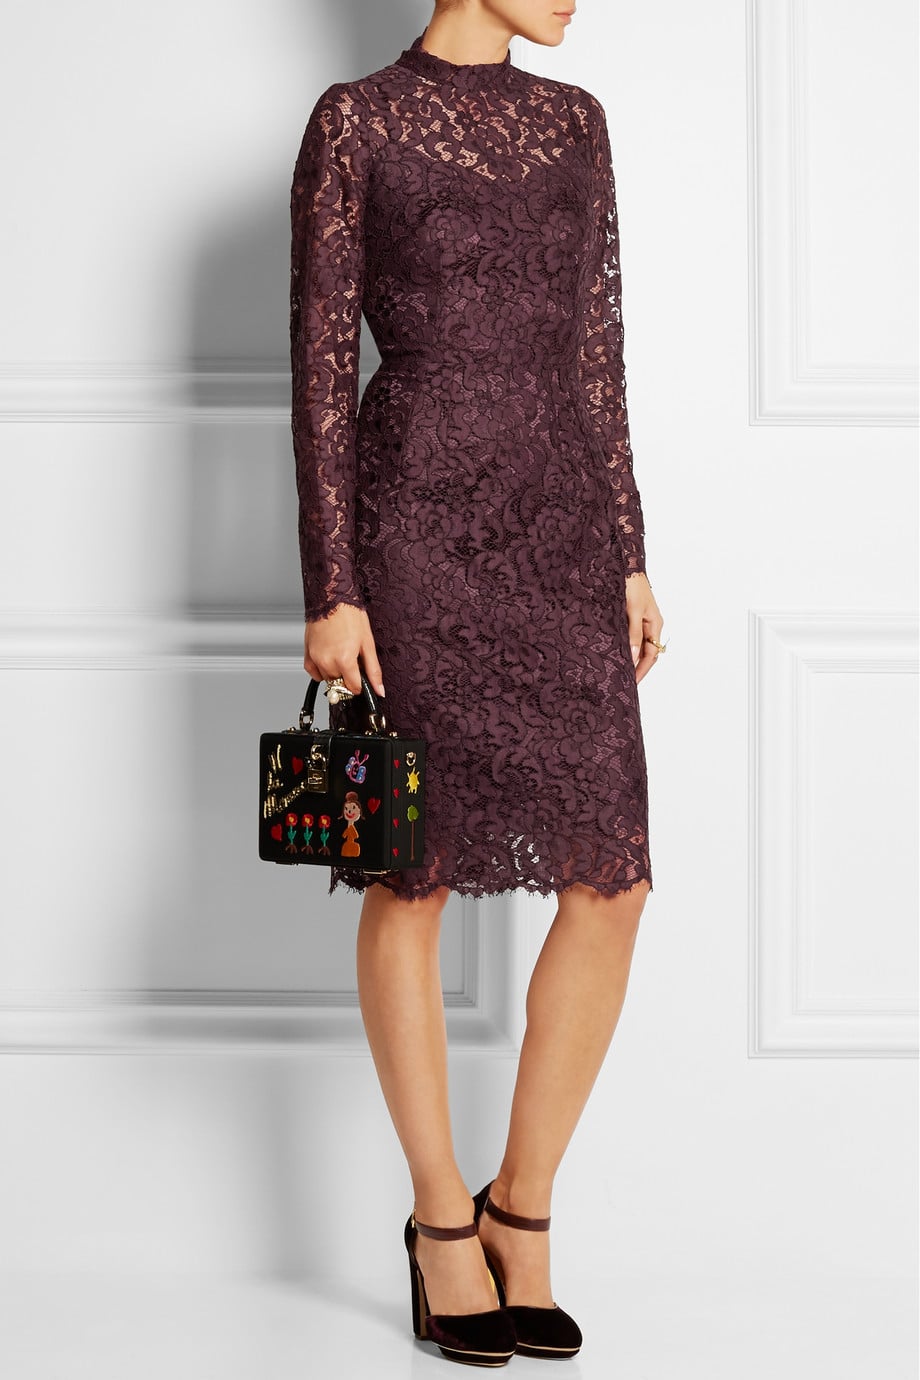 Princess Kate Ravishes in a $2,800 Plum Lace Dress